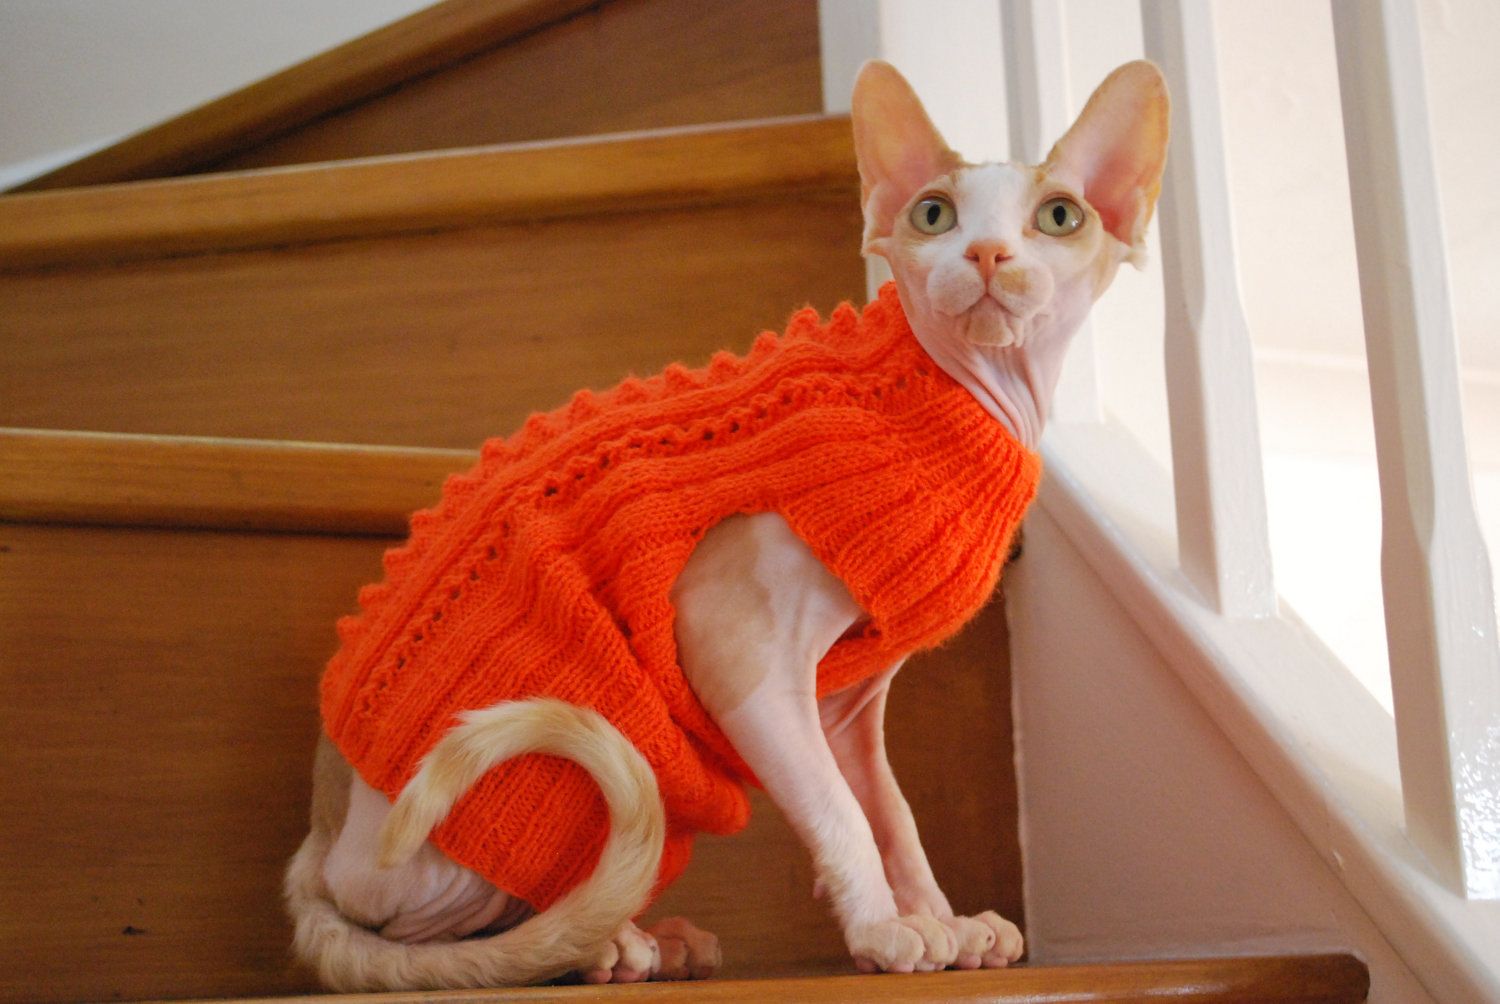 turuncu yelek giyen sfenks cinsi kedi